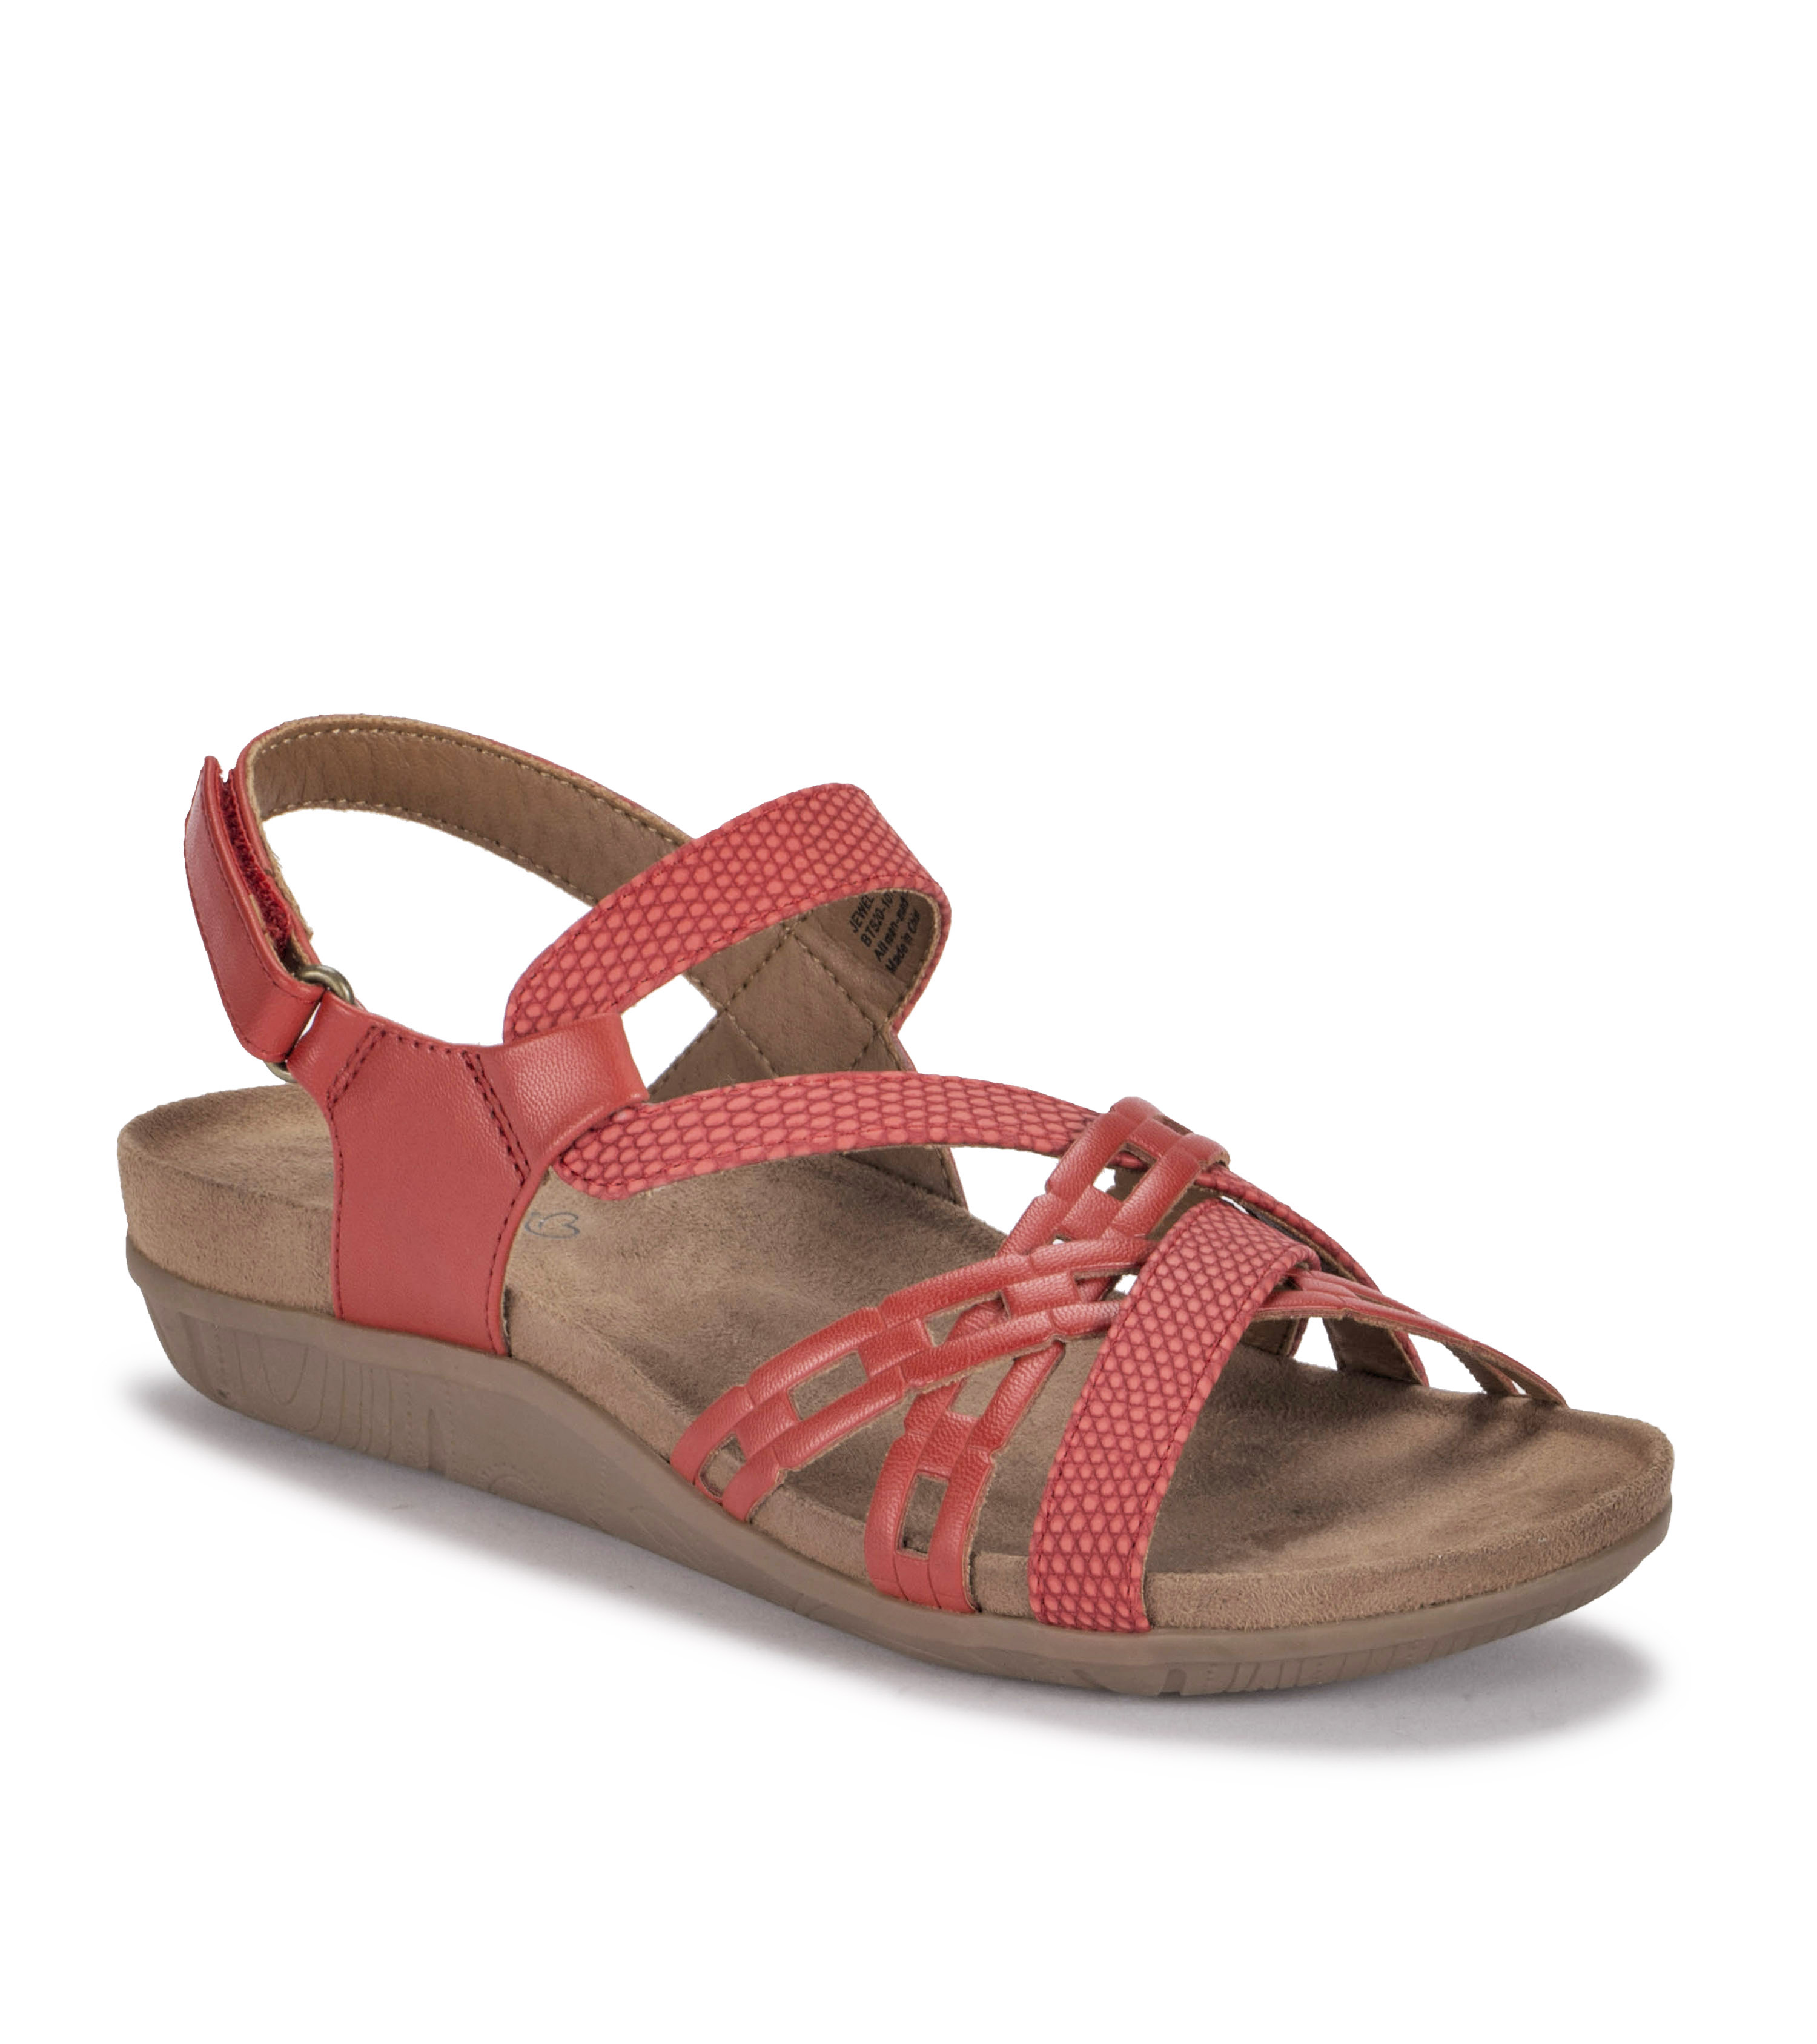 Baretraps JEWEL Women's Sandals Red Lizard | eBay